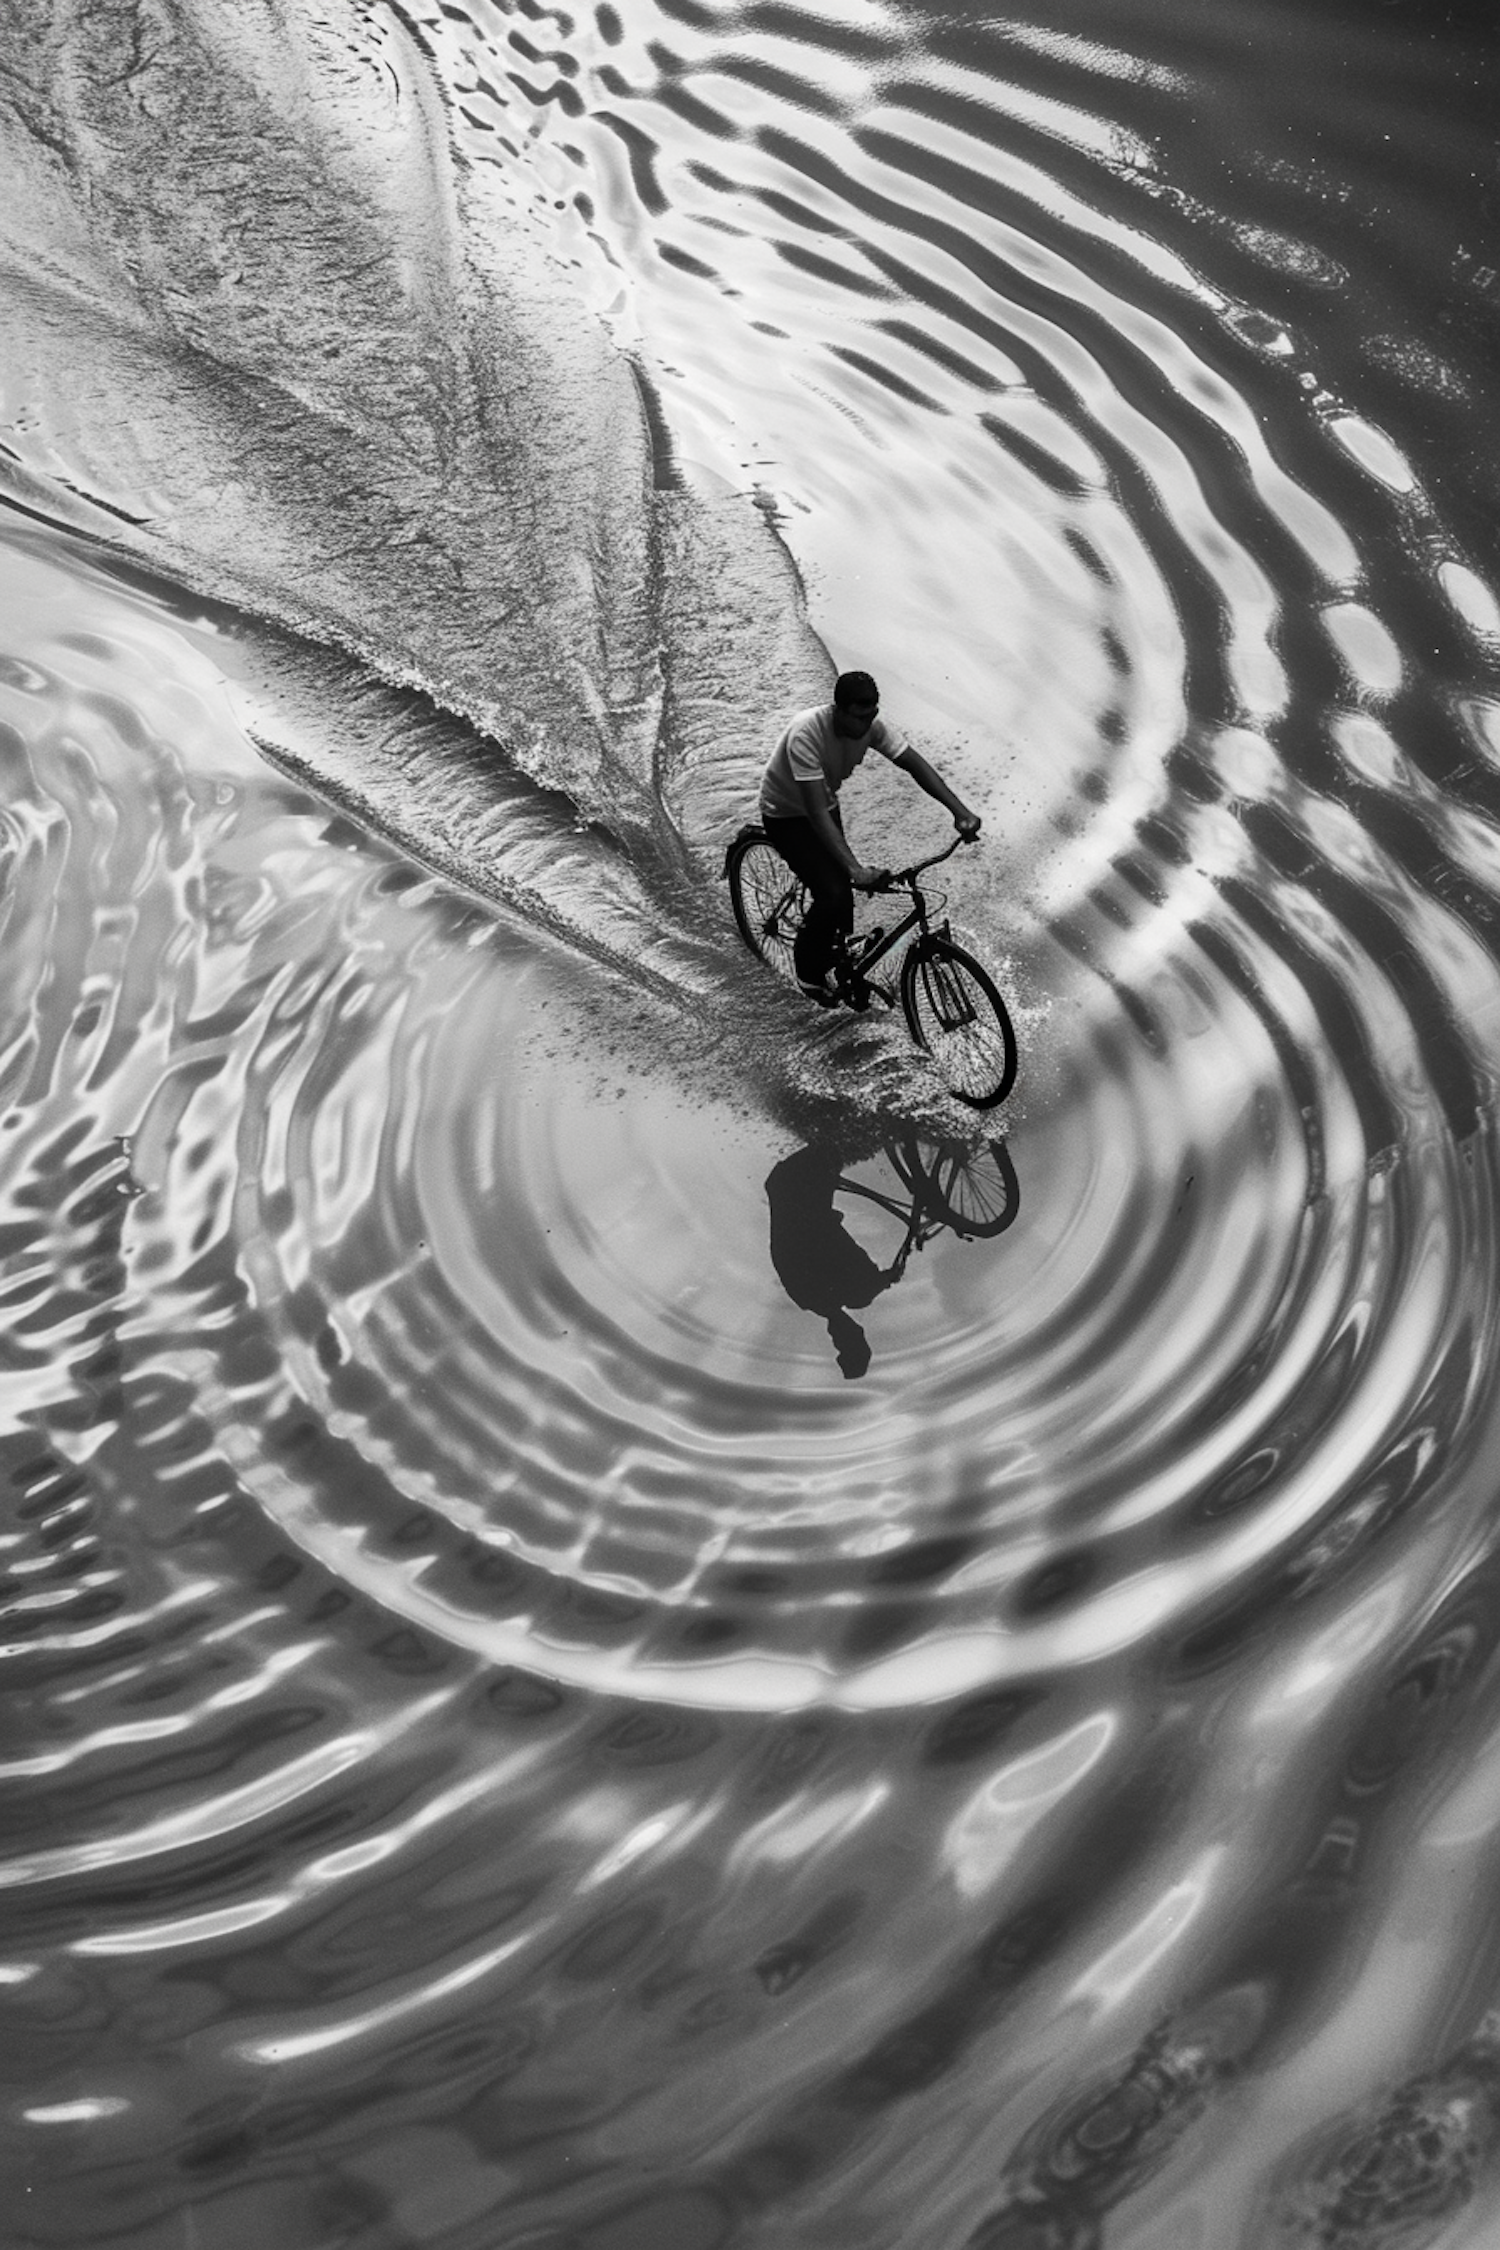 Bicycle Journey Across Water